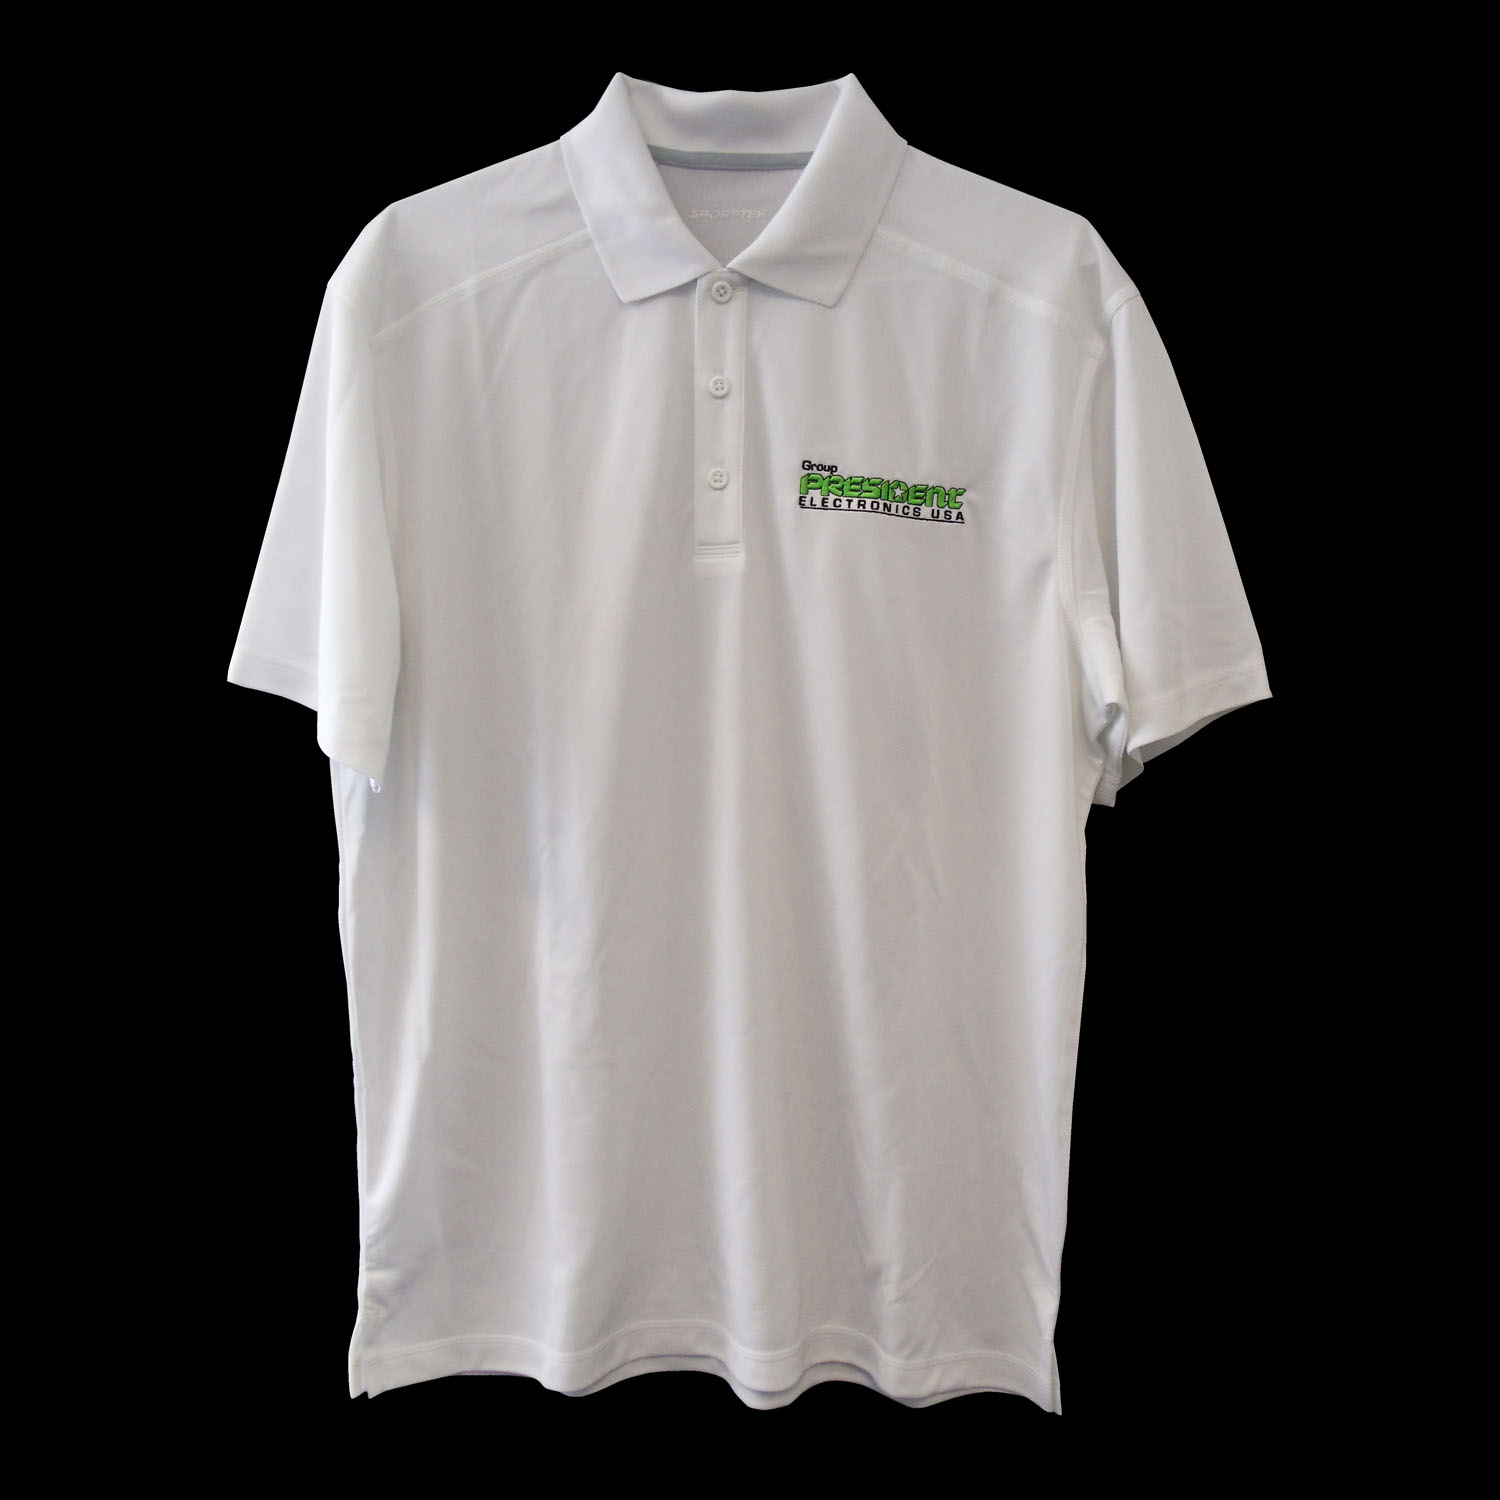 President Electronics Logo White Polo Shirt - Size 2Xl